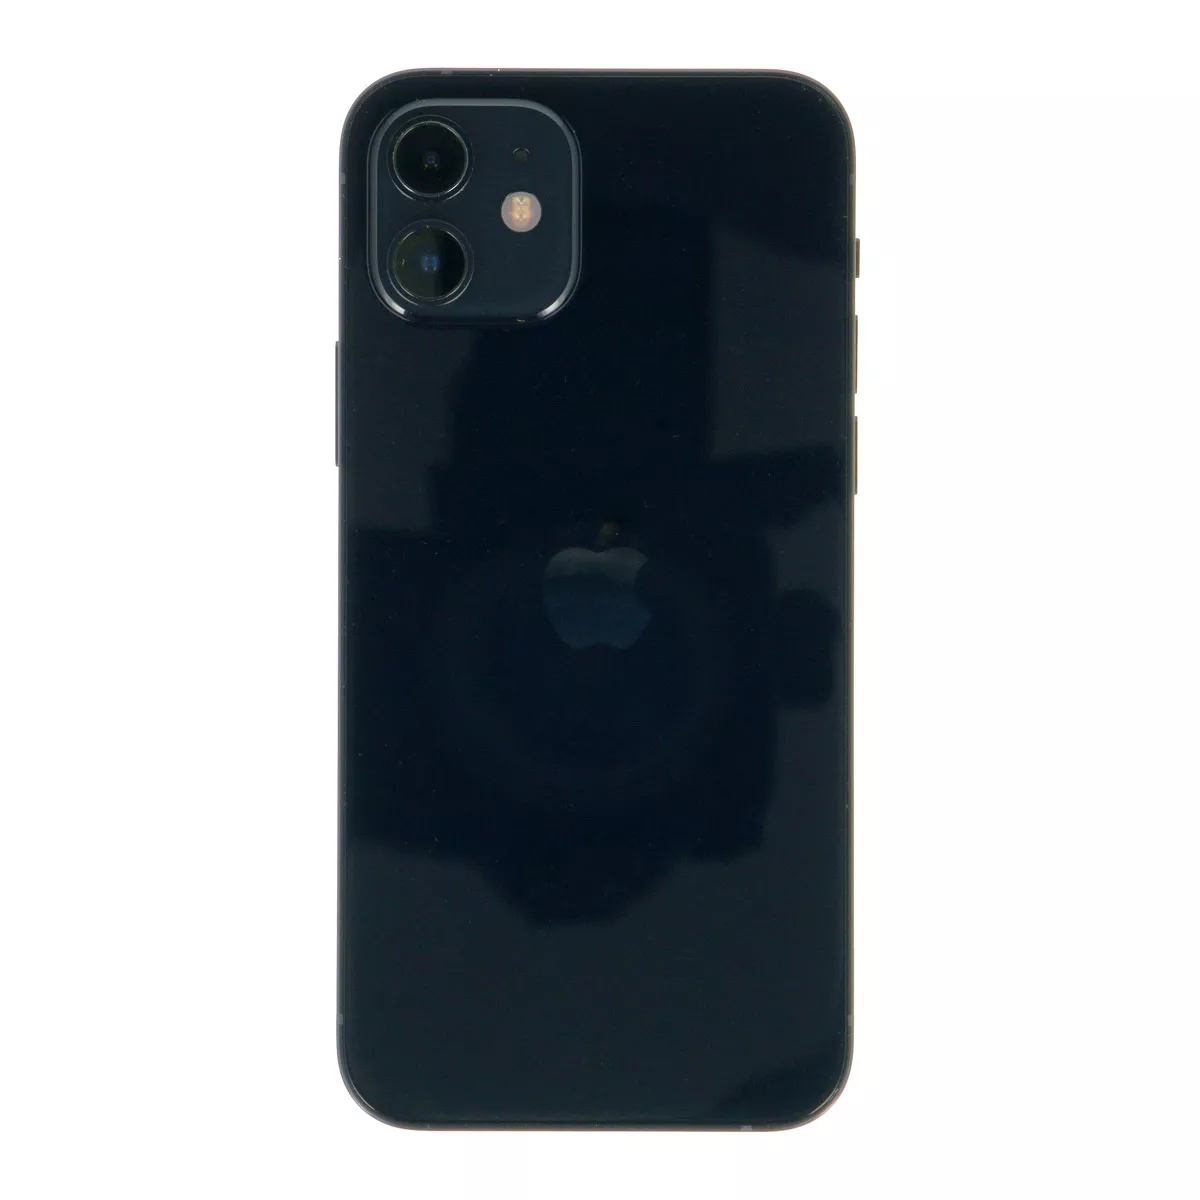 Apple iPhone 12 128 GB Black A